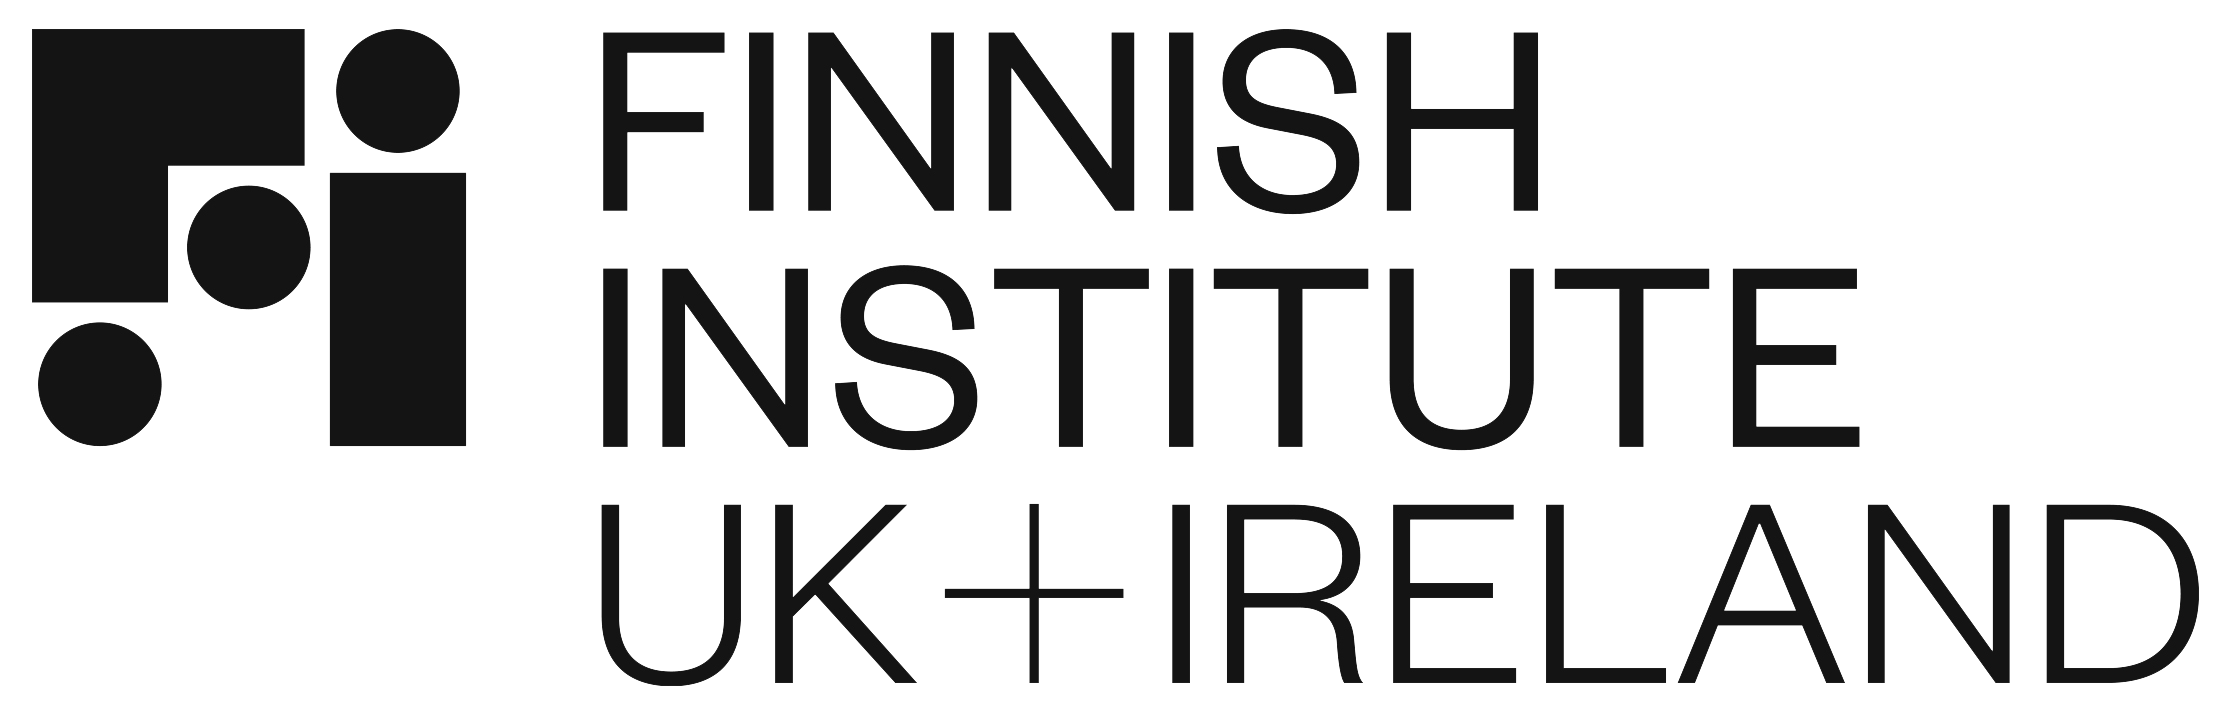 Finnish Institute in the UK and Ireland